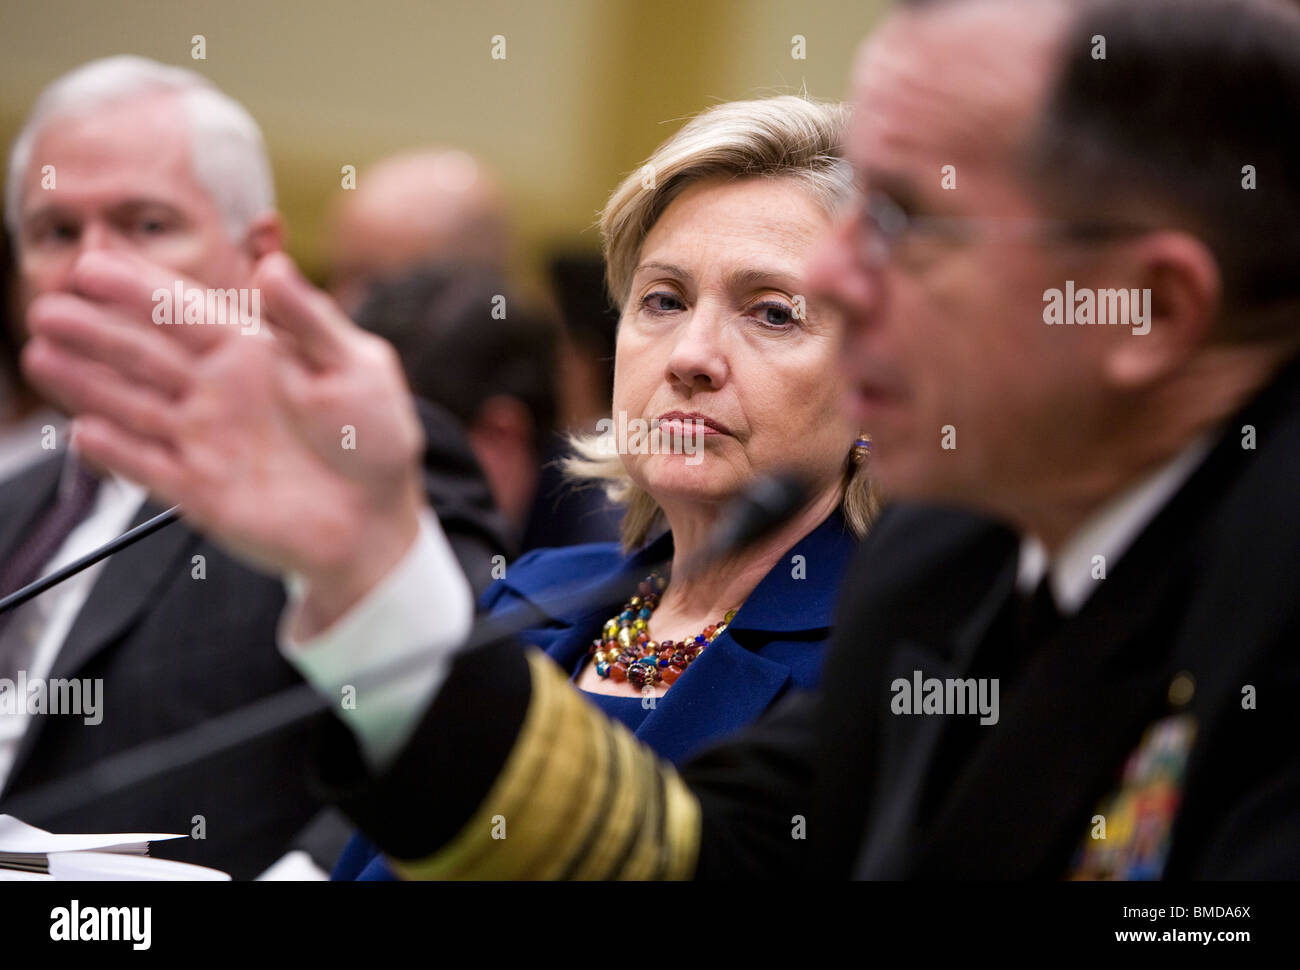 Defense Secretary Robert Gates, Secretary Of State Hillary Clinton and Chairman Joint Chiefs Of Staff Michael Mullen. Stock Photo